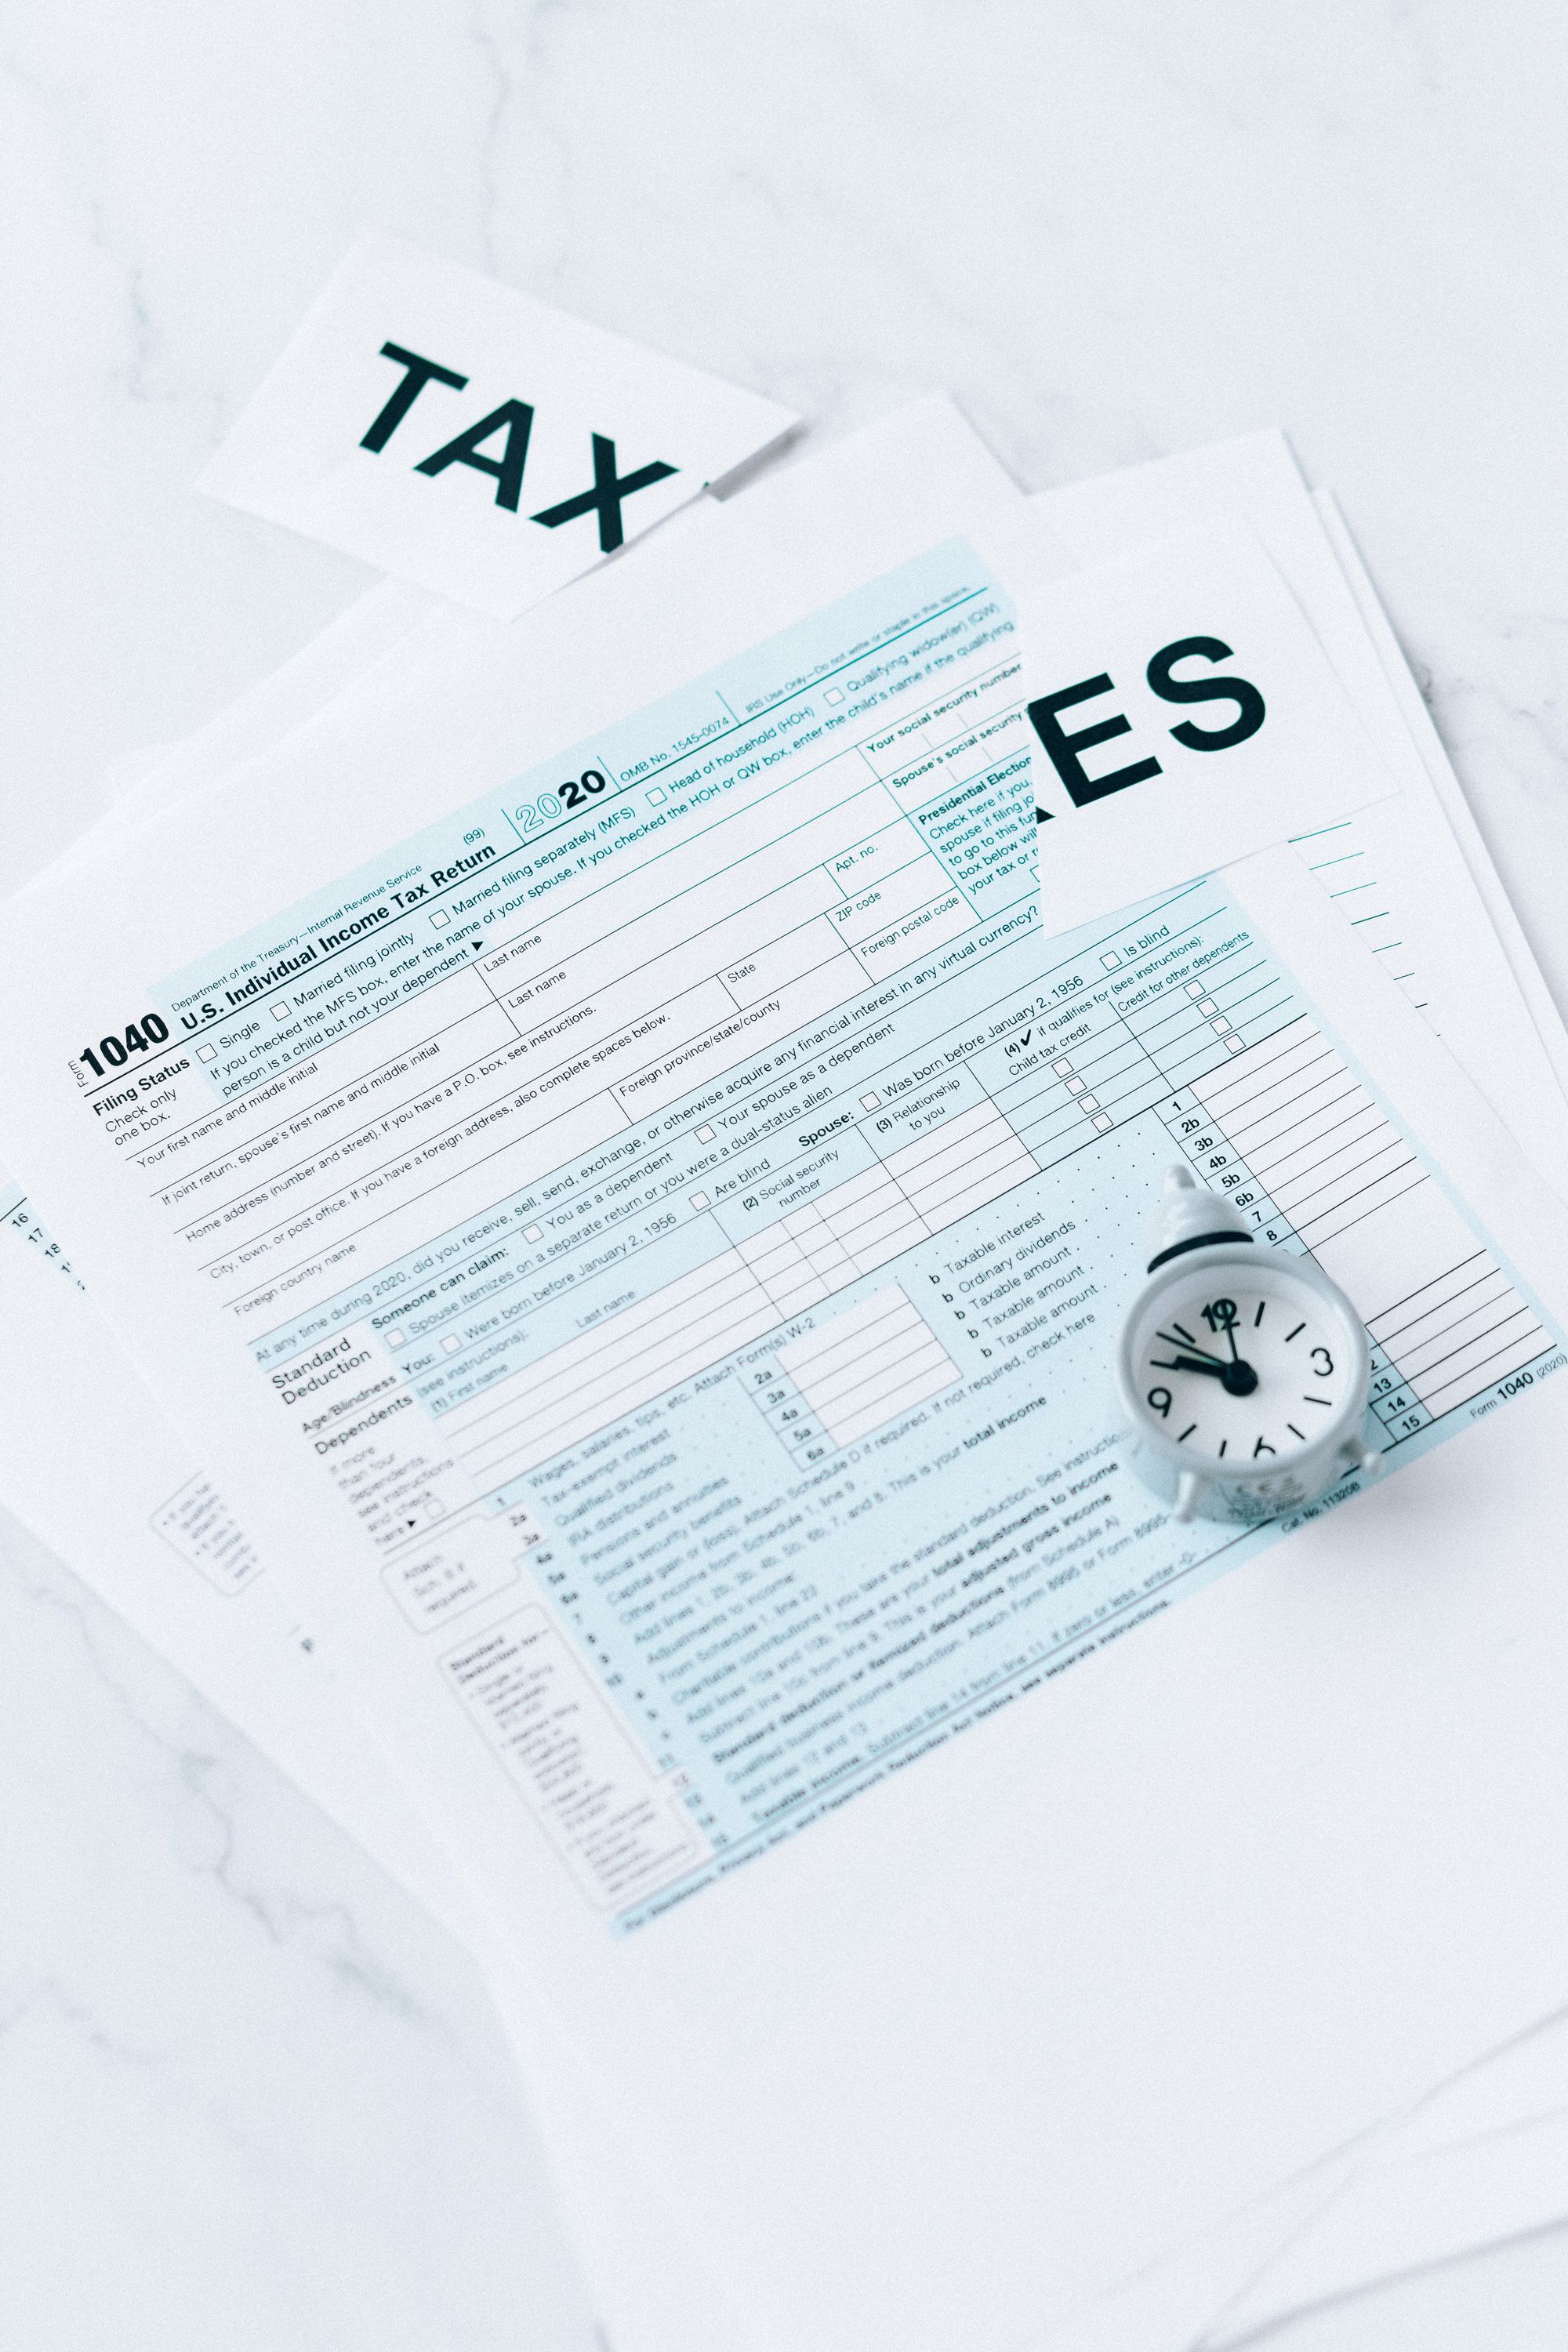 Key Tax Credits and Deductions